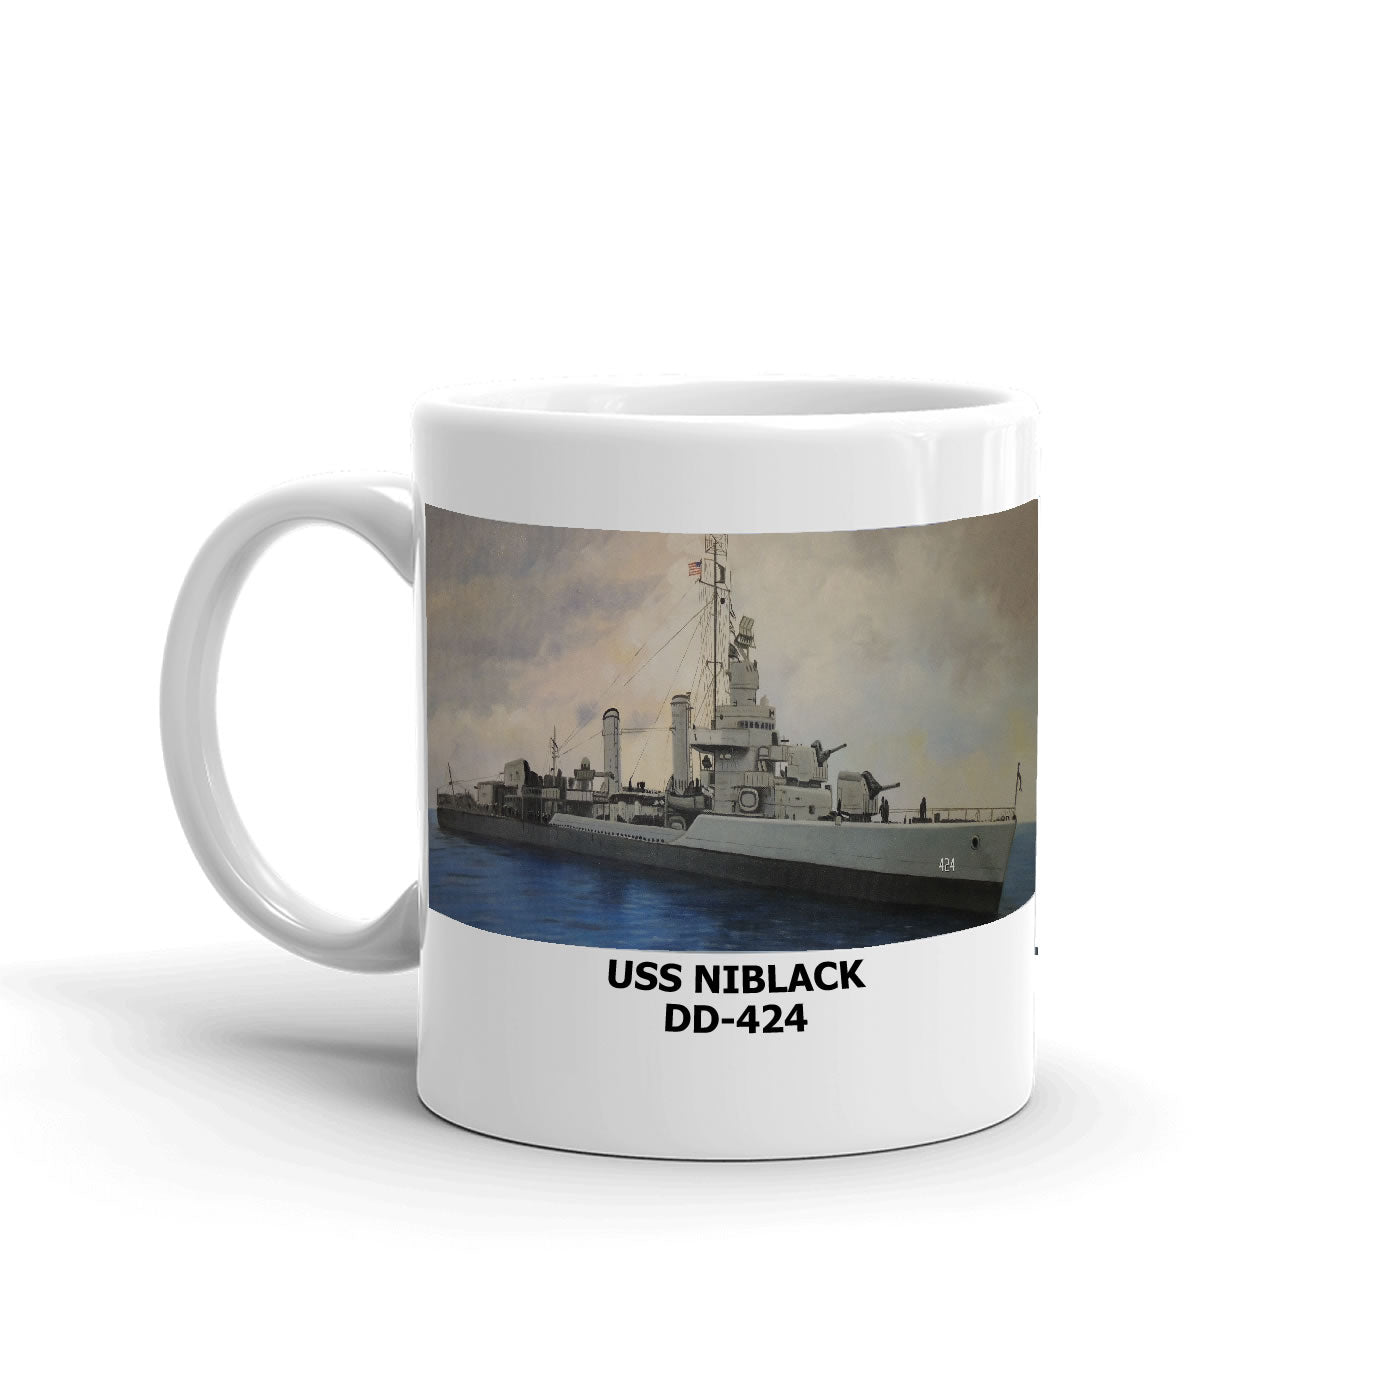 USS Niblack DD-424 Coffee Cup Mug Left Handle